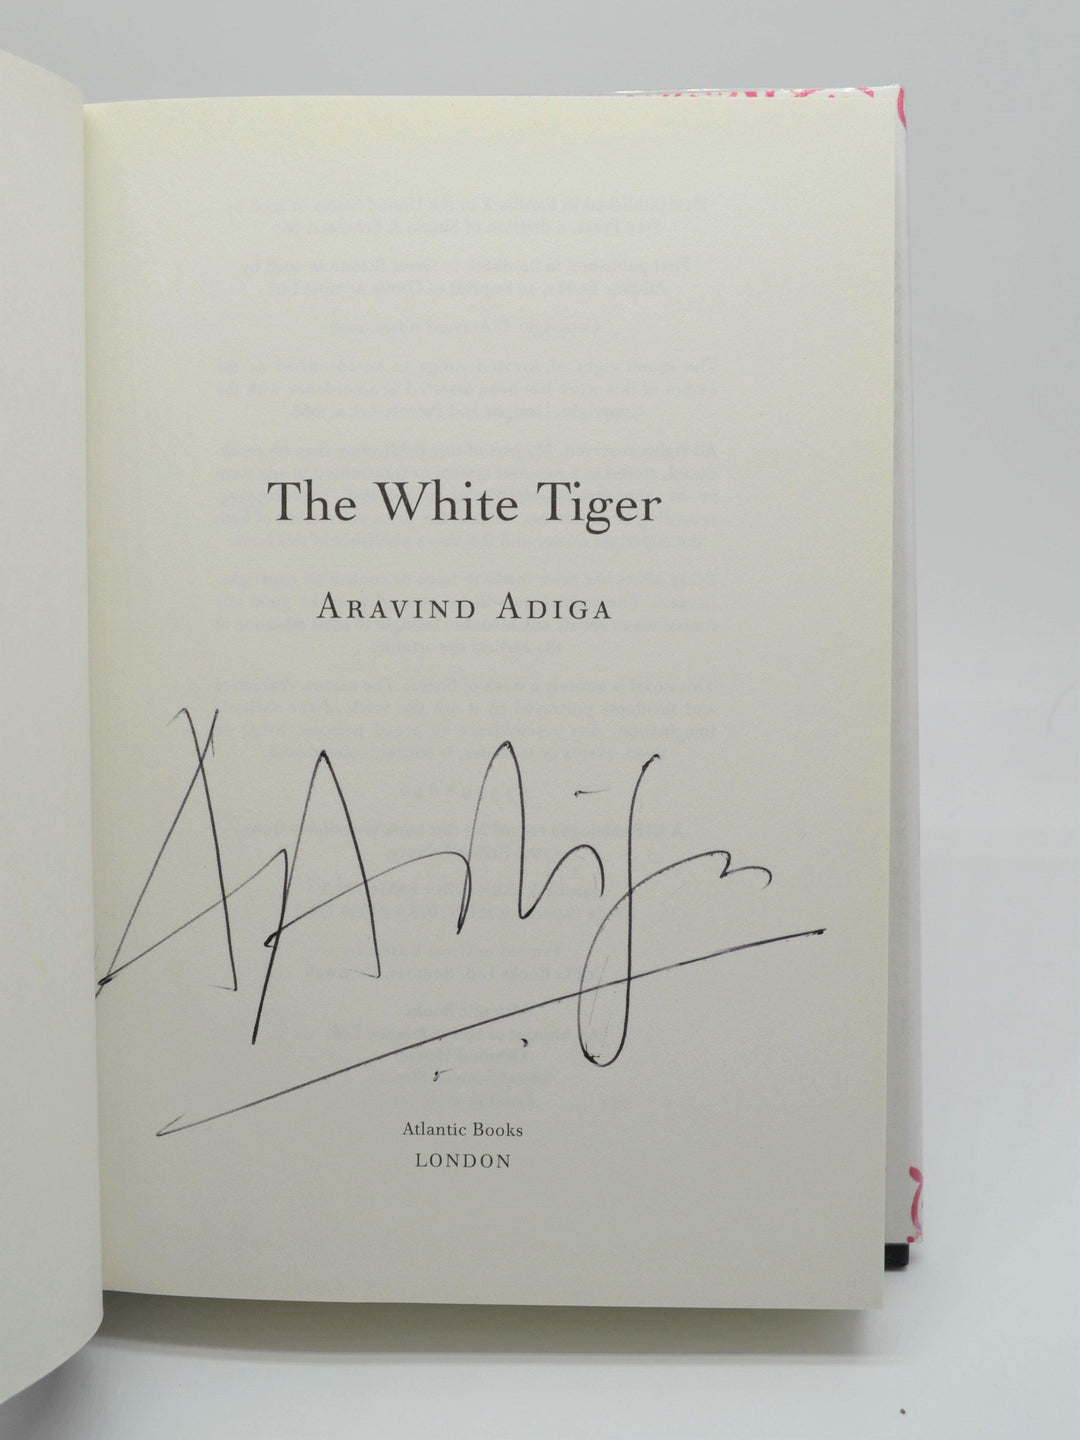 Adiga, Aravind - The White Tiger | sample illustration